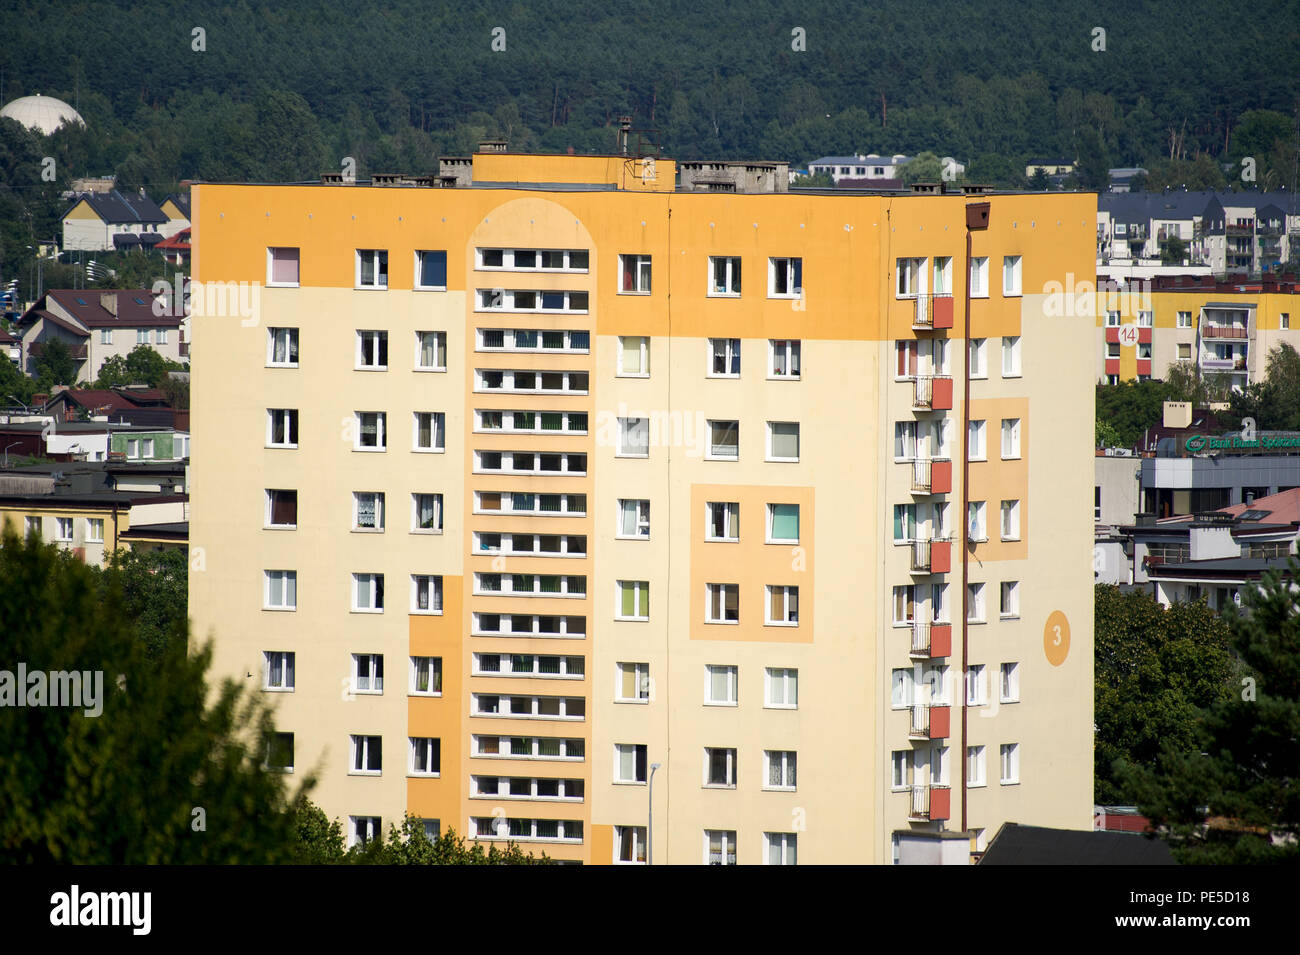 Communist era apartment buildings in Rumia, Poland. August 8th 2018 © Wojciech Strozyk / Alamy Stock Photo Stock Photo